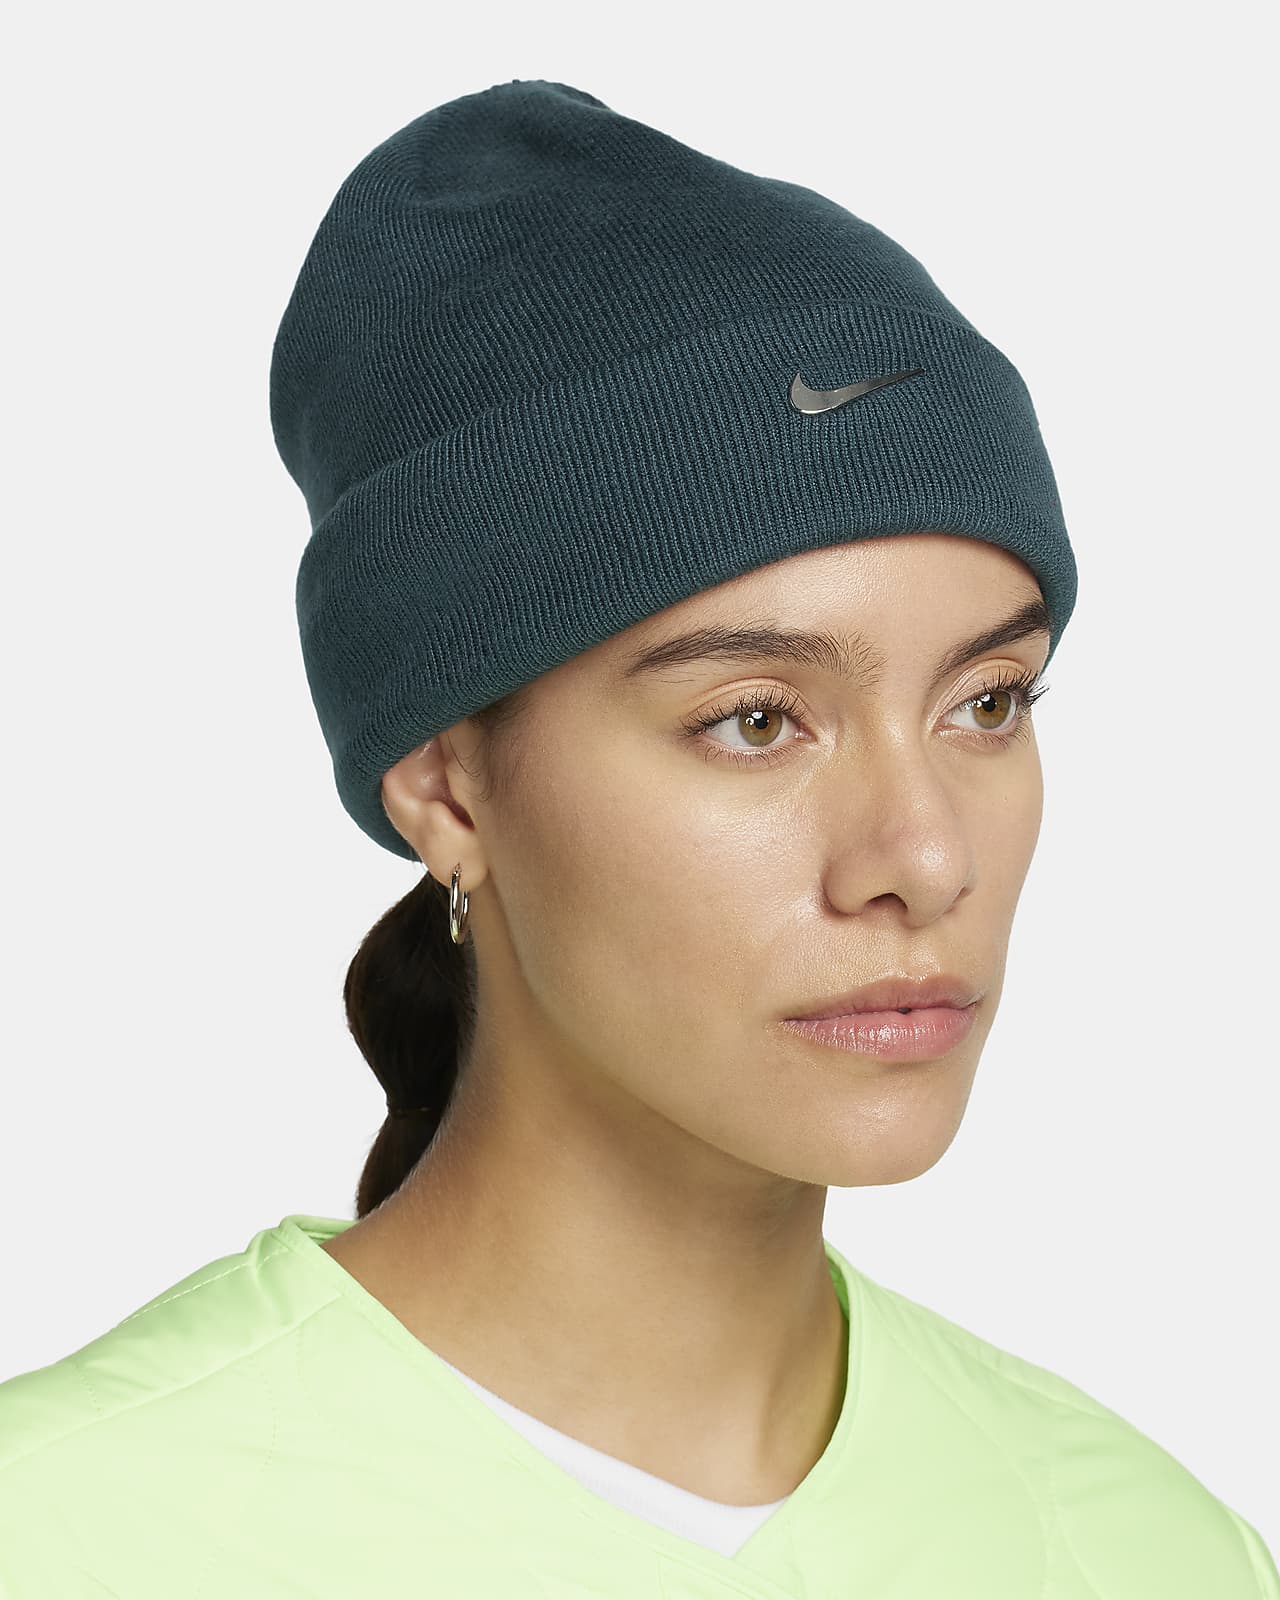 Nike Running - Bonnet à logo virgule - Gris